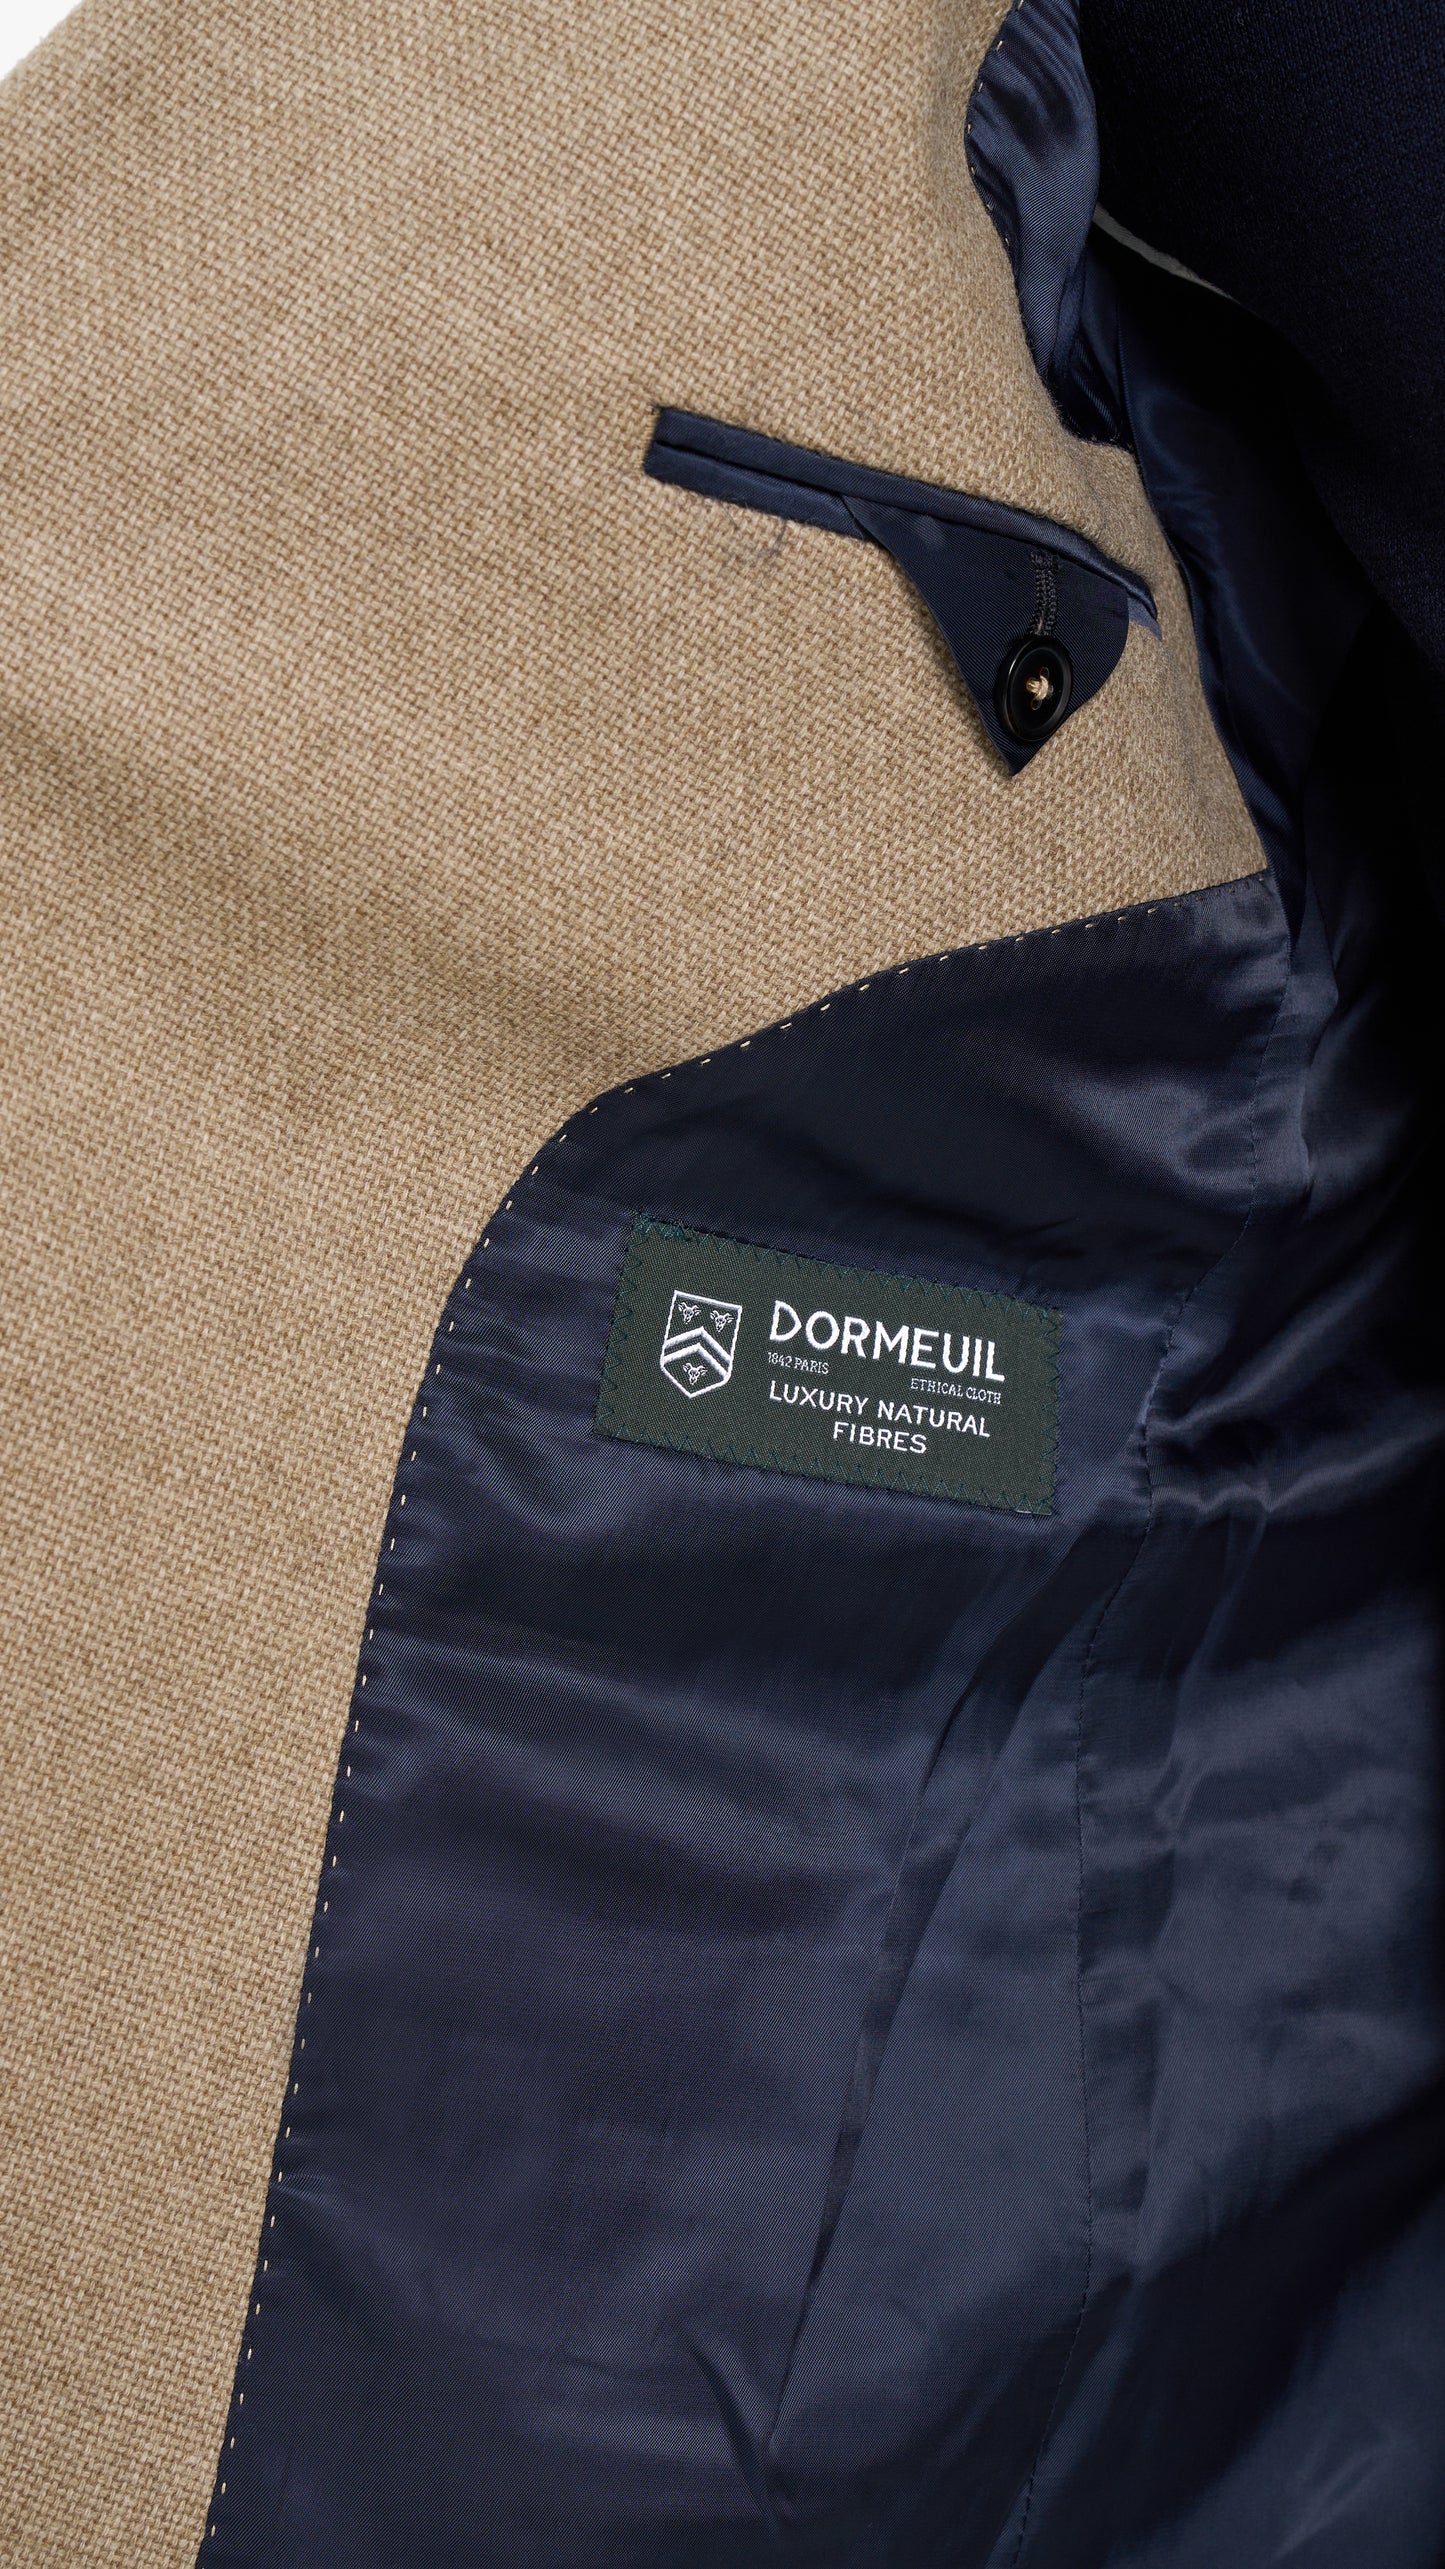 Dormeuil Beige Cashmere Blend Plain Custom Jacket